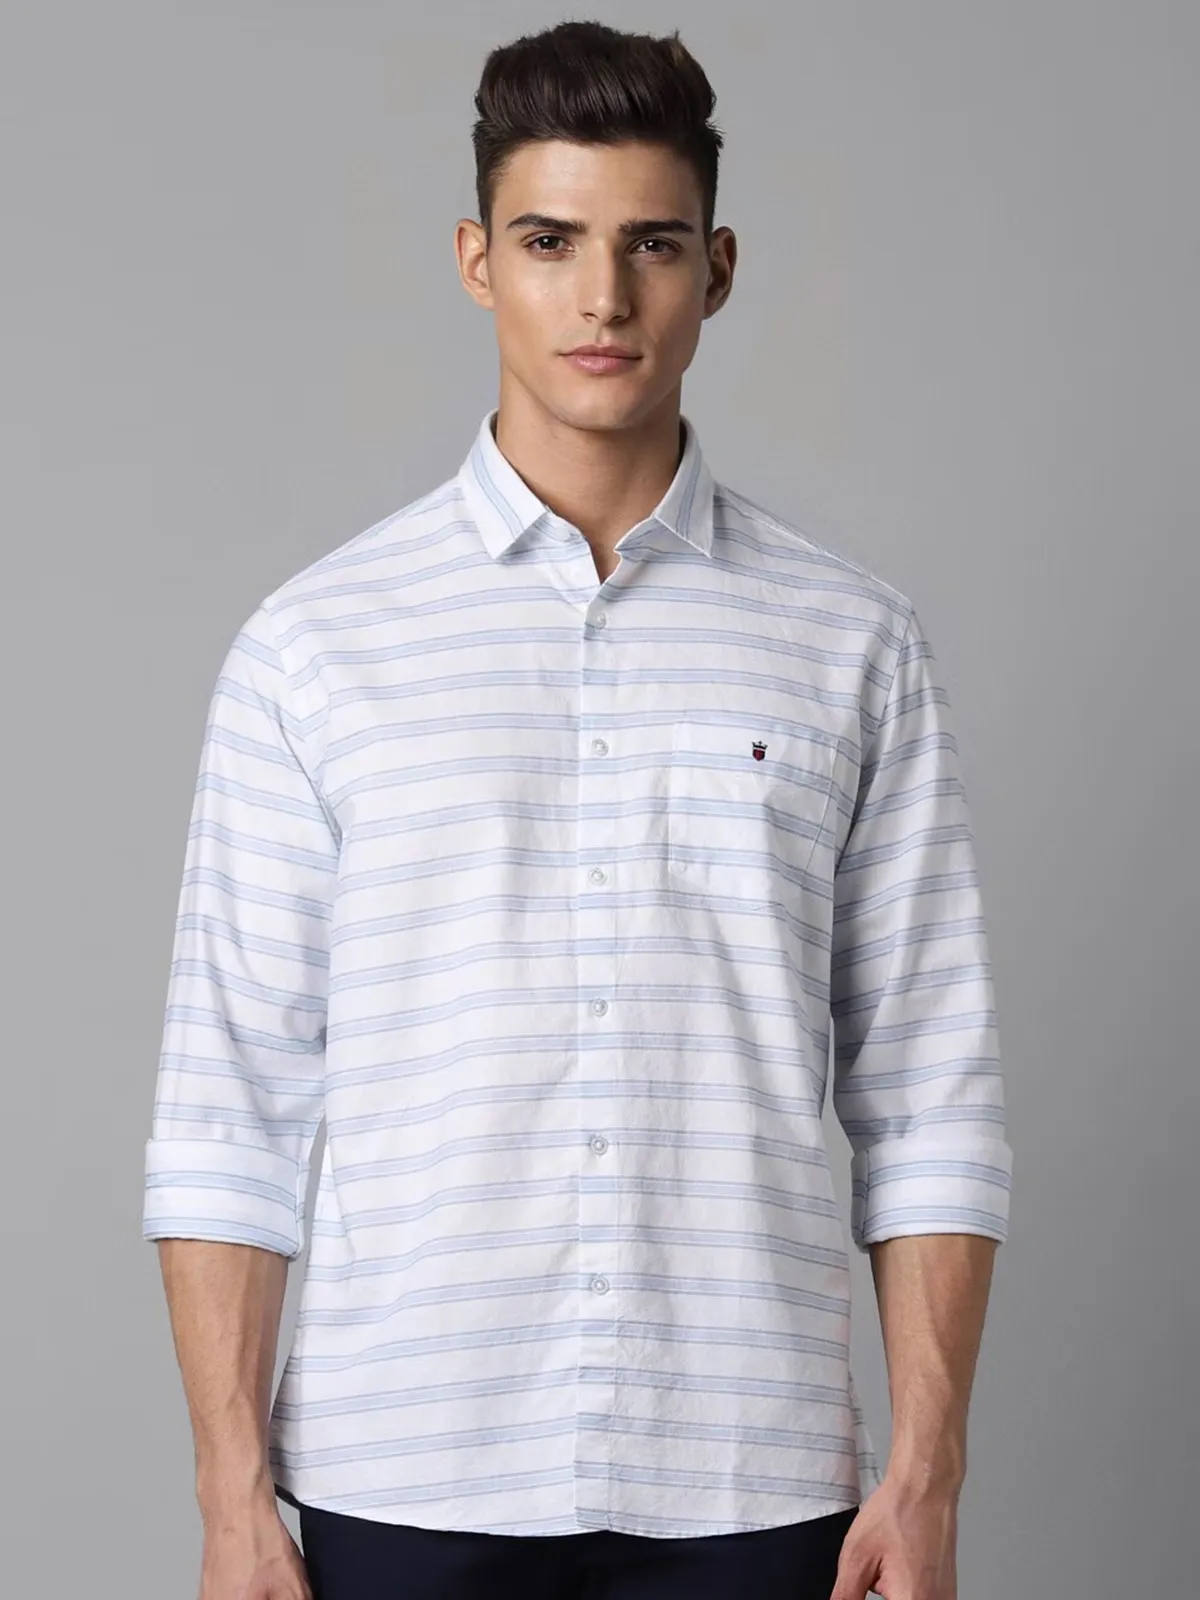 LP white stripe cotton casual shirt